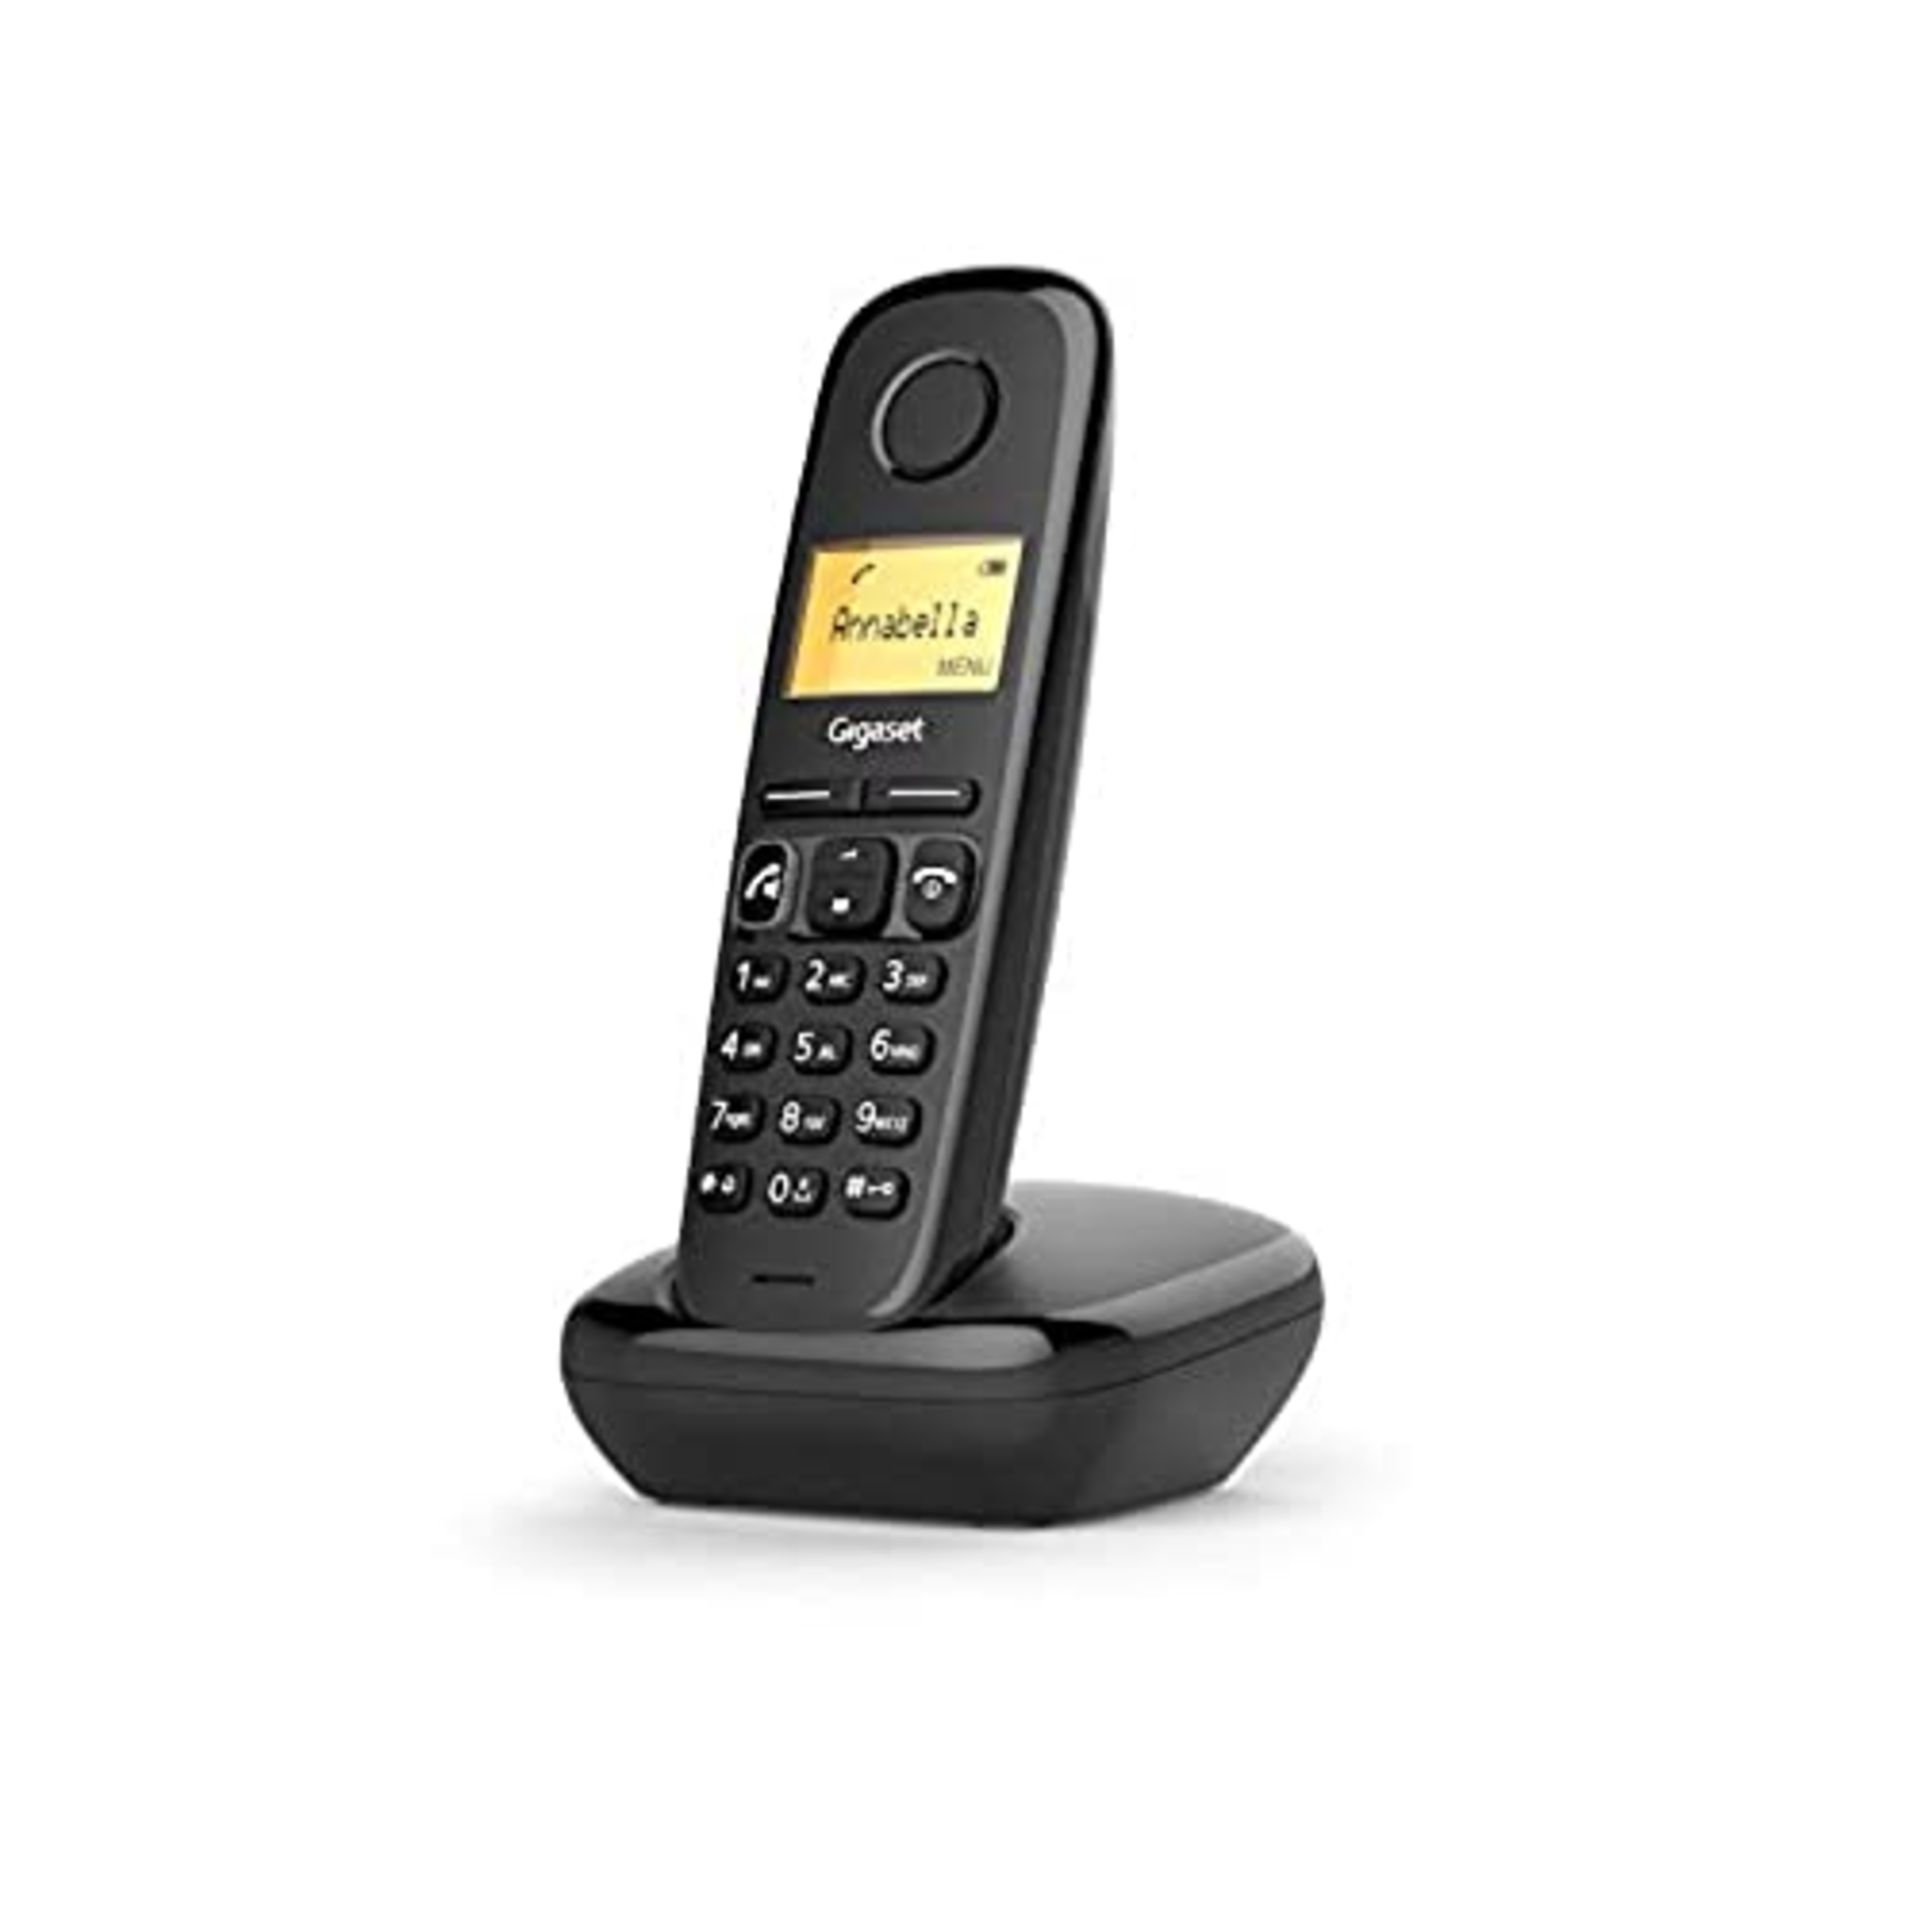 Gigaset A270 - Basic Cordless Home Phone with Big Display and Speakerphone - Black